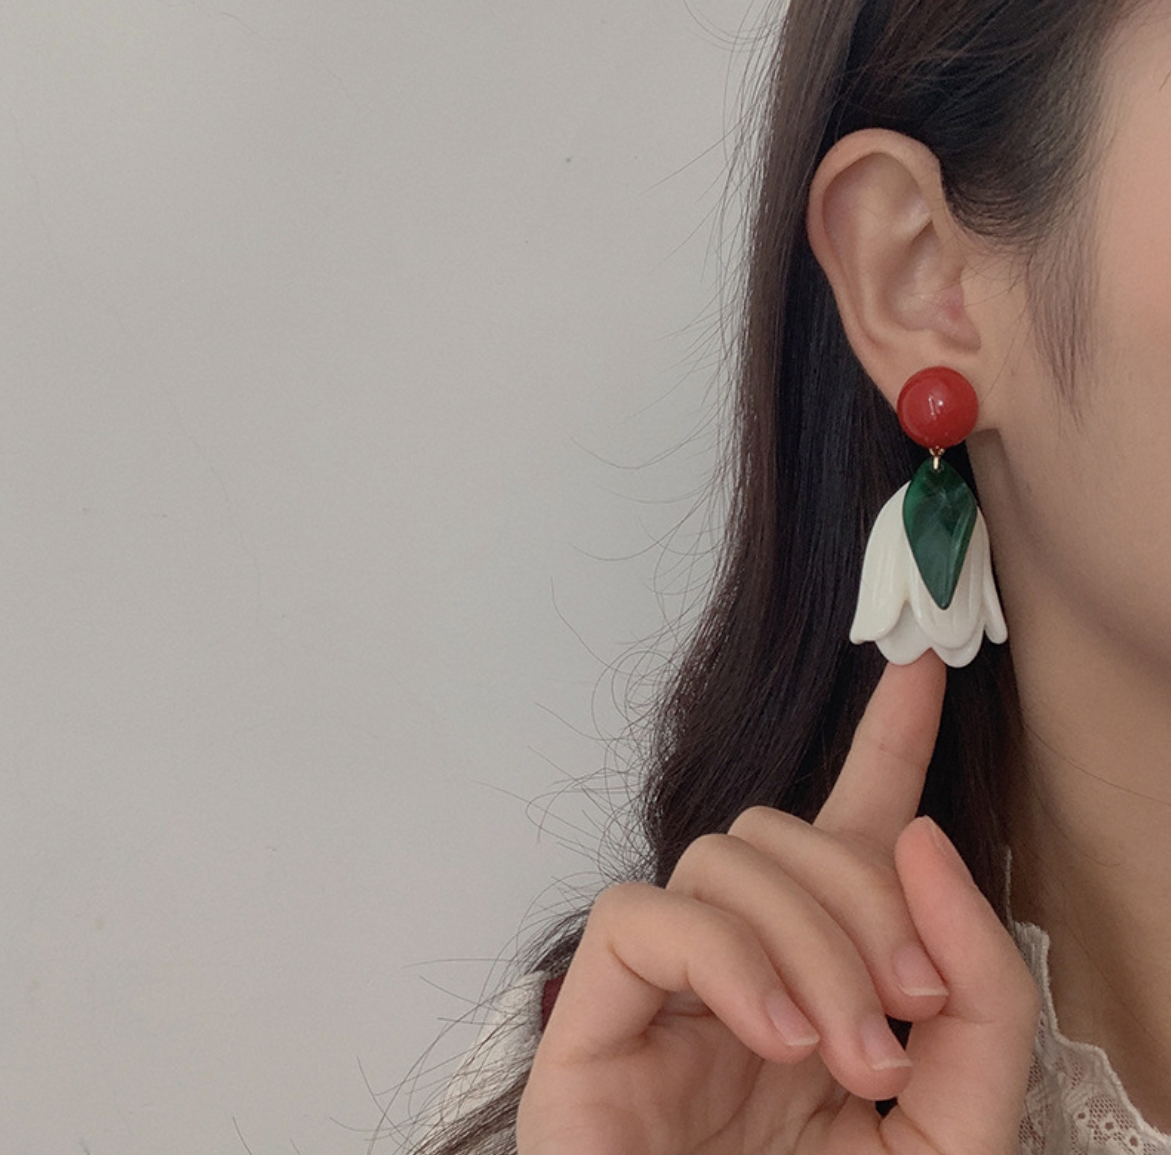 Retro hit color tulip art earrings